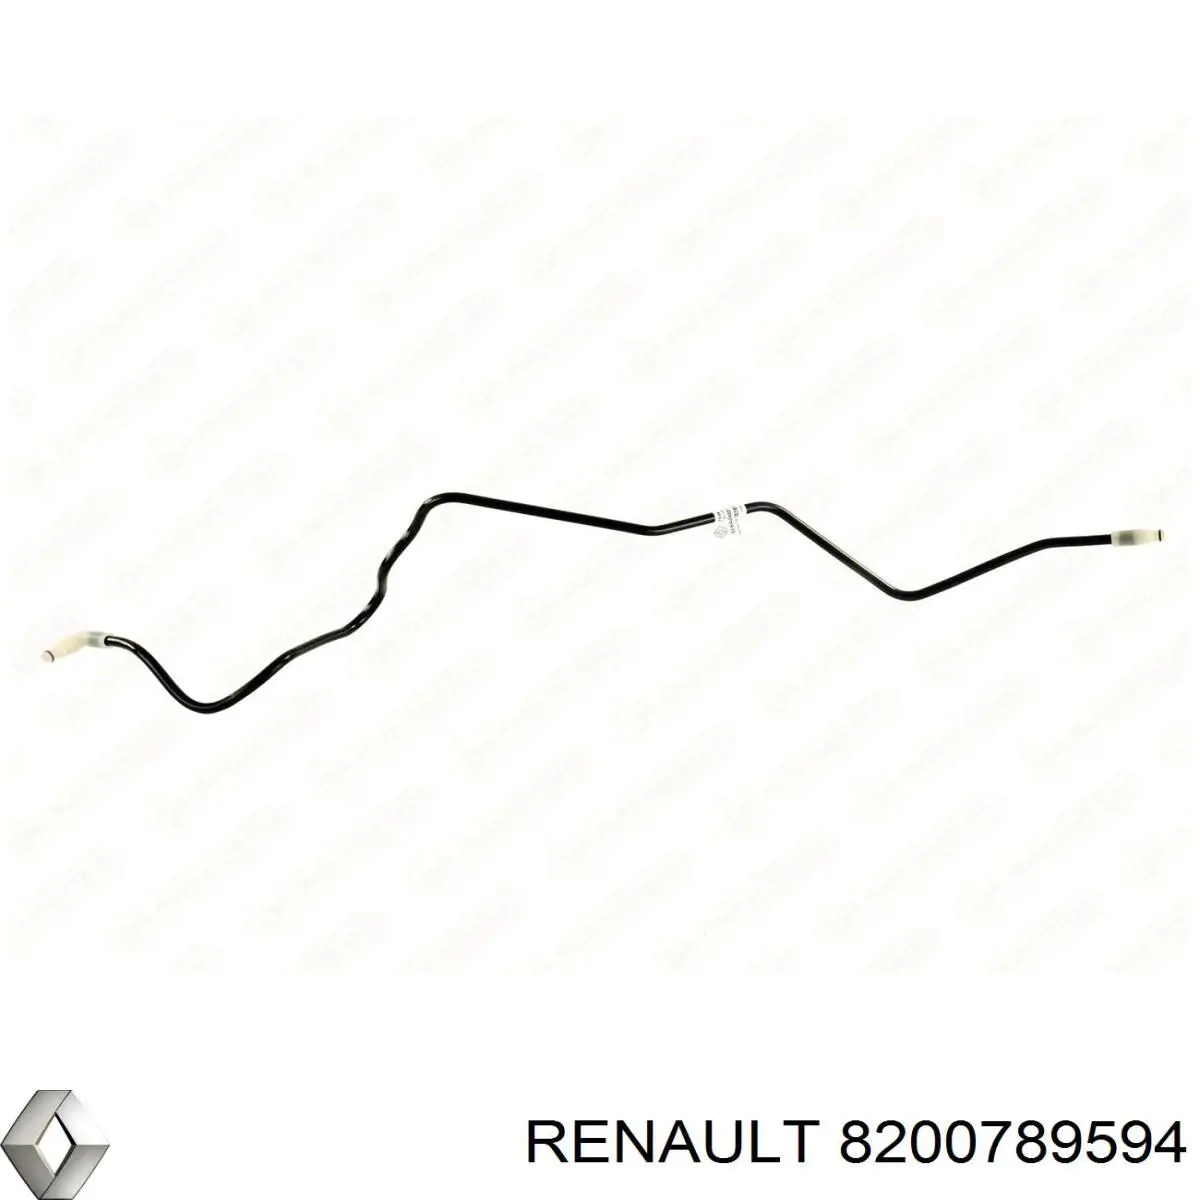 Шланг сцепления на Renault Master IV 